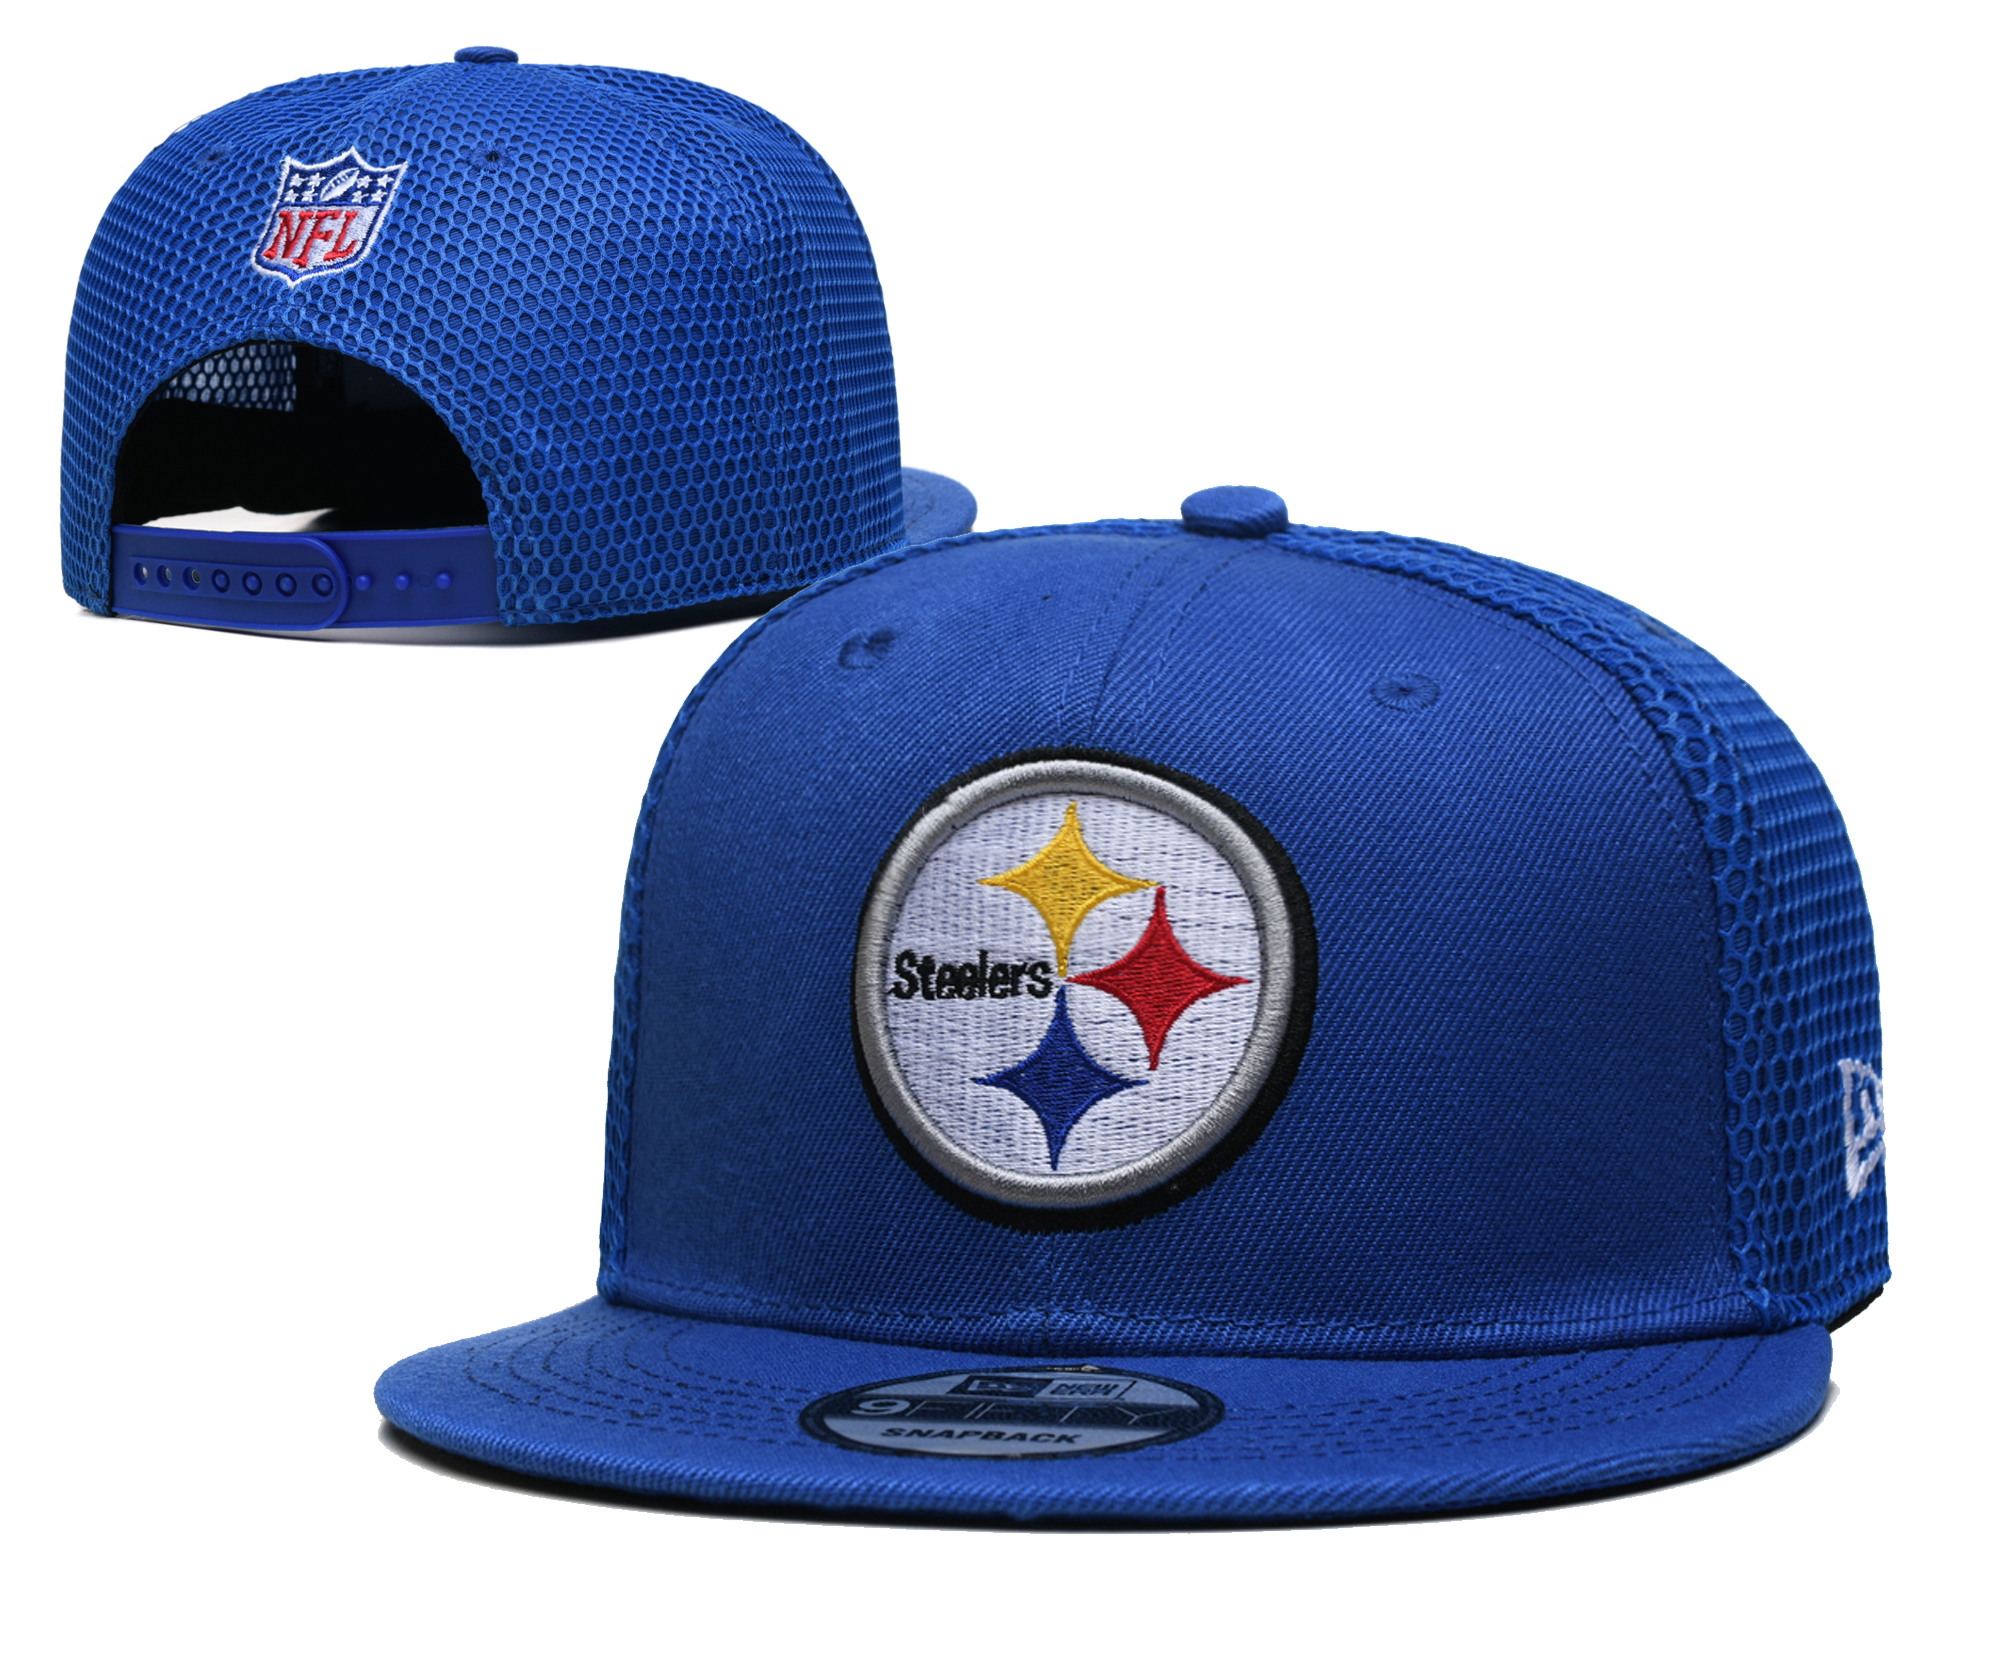 2021 NFL Pittsburgh Steelers #1 TX hat